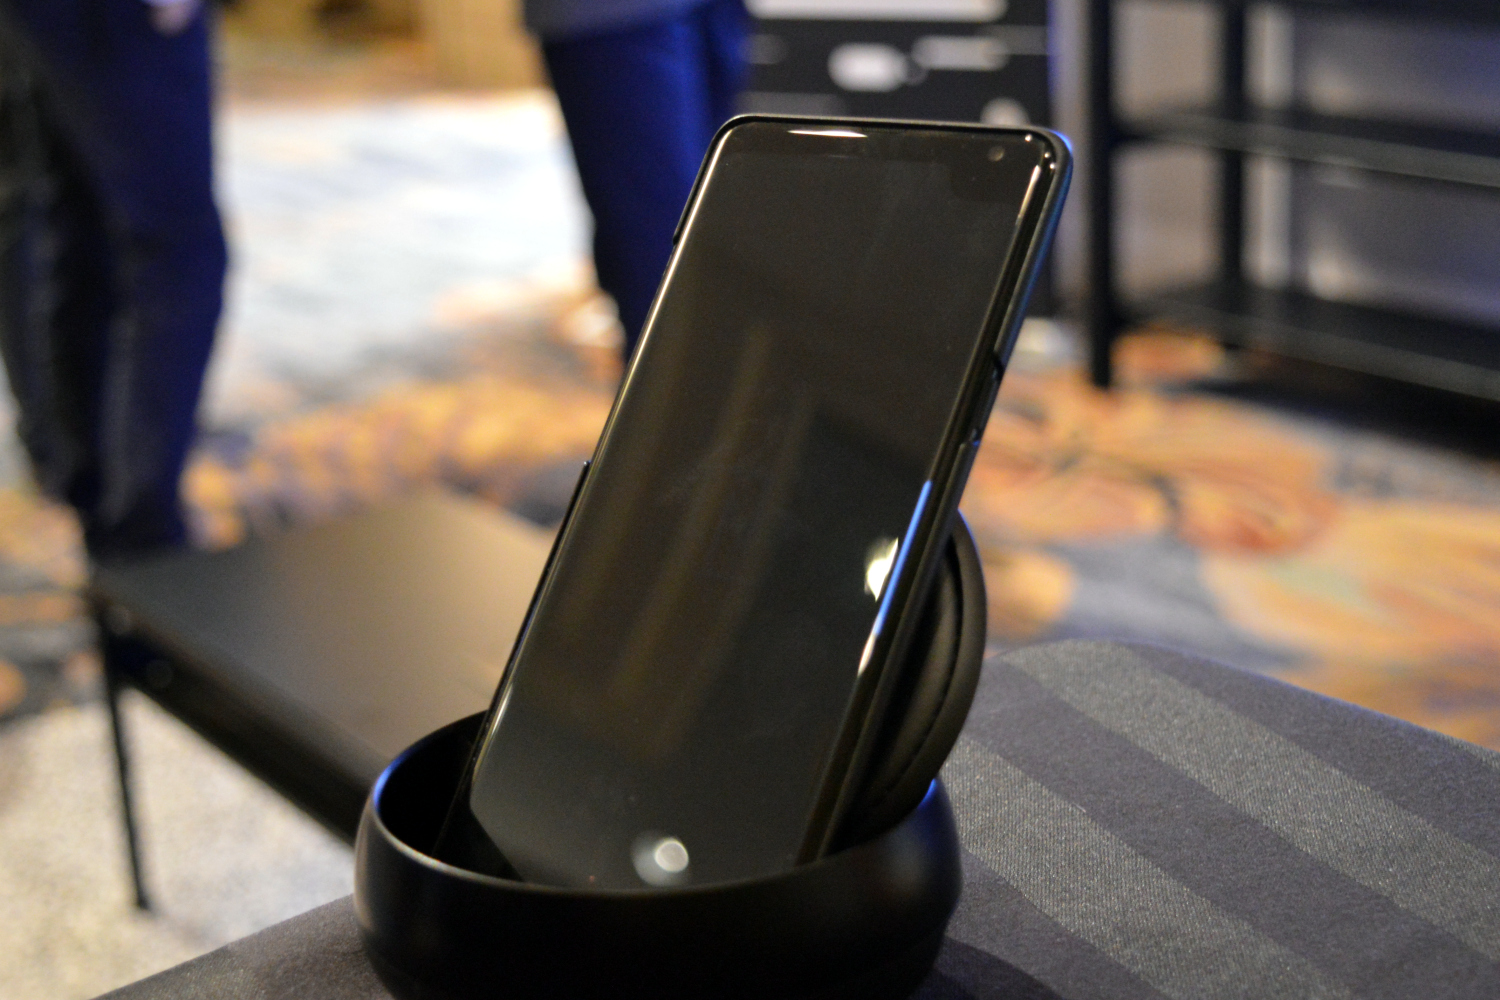 Samsung's 5G concept phone